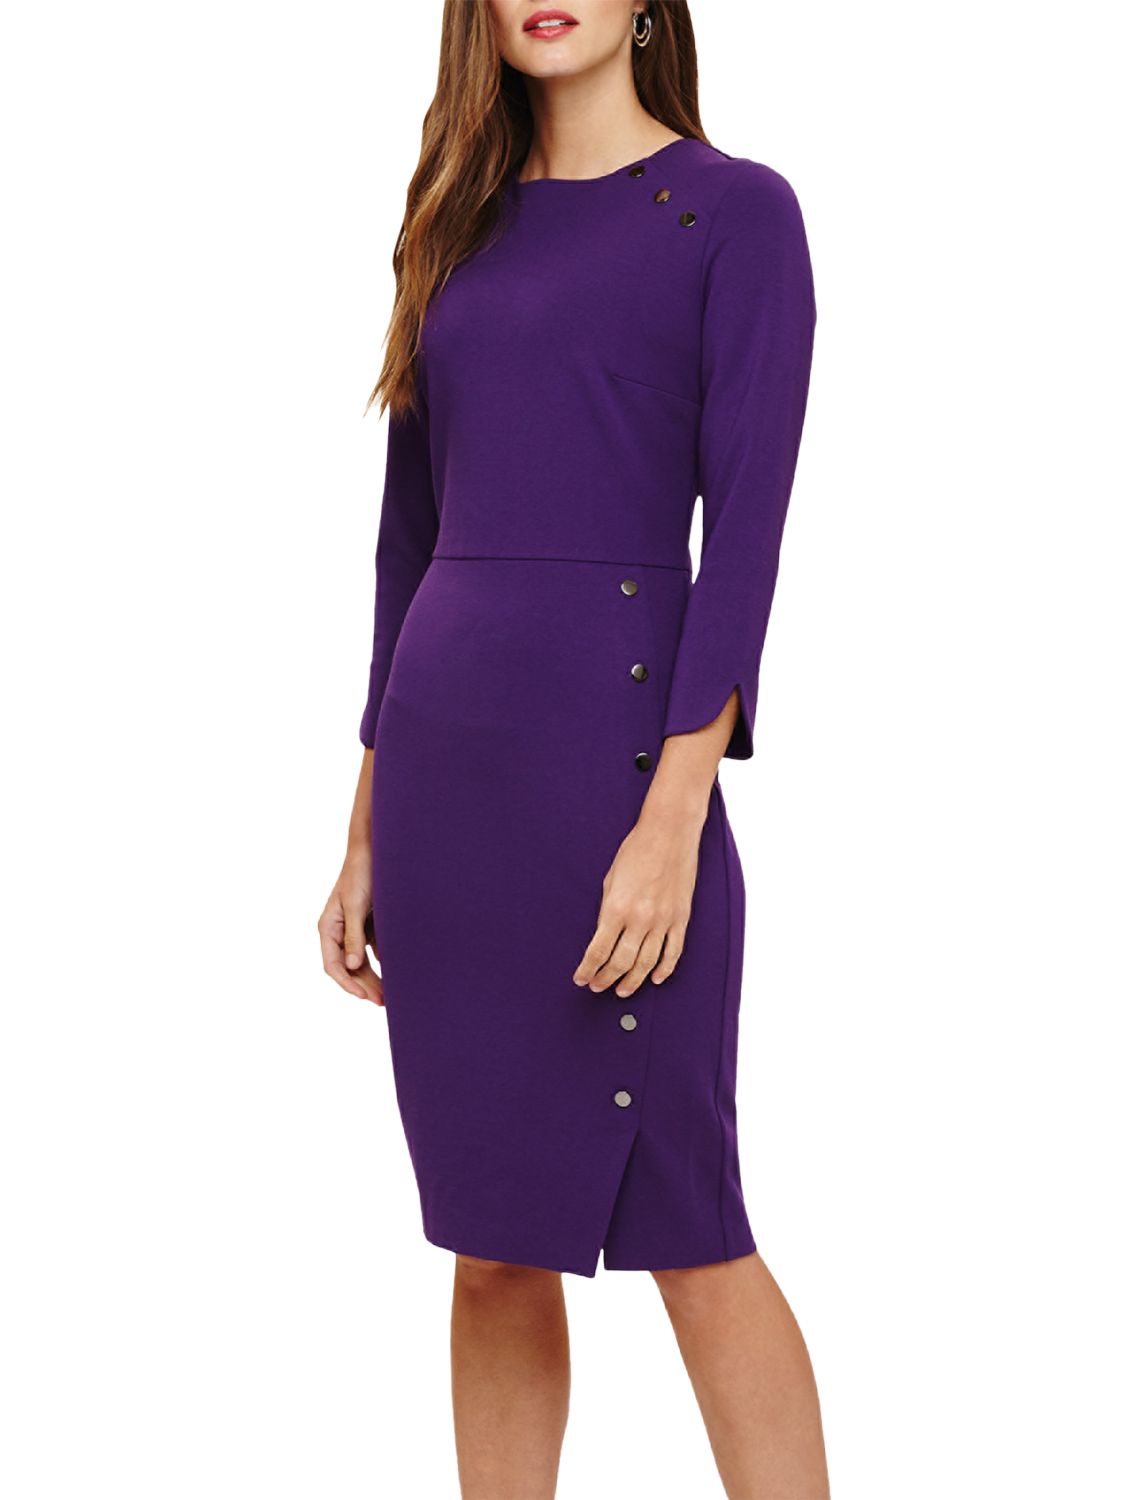 phase 8 purple dress